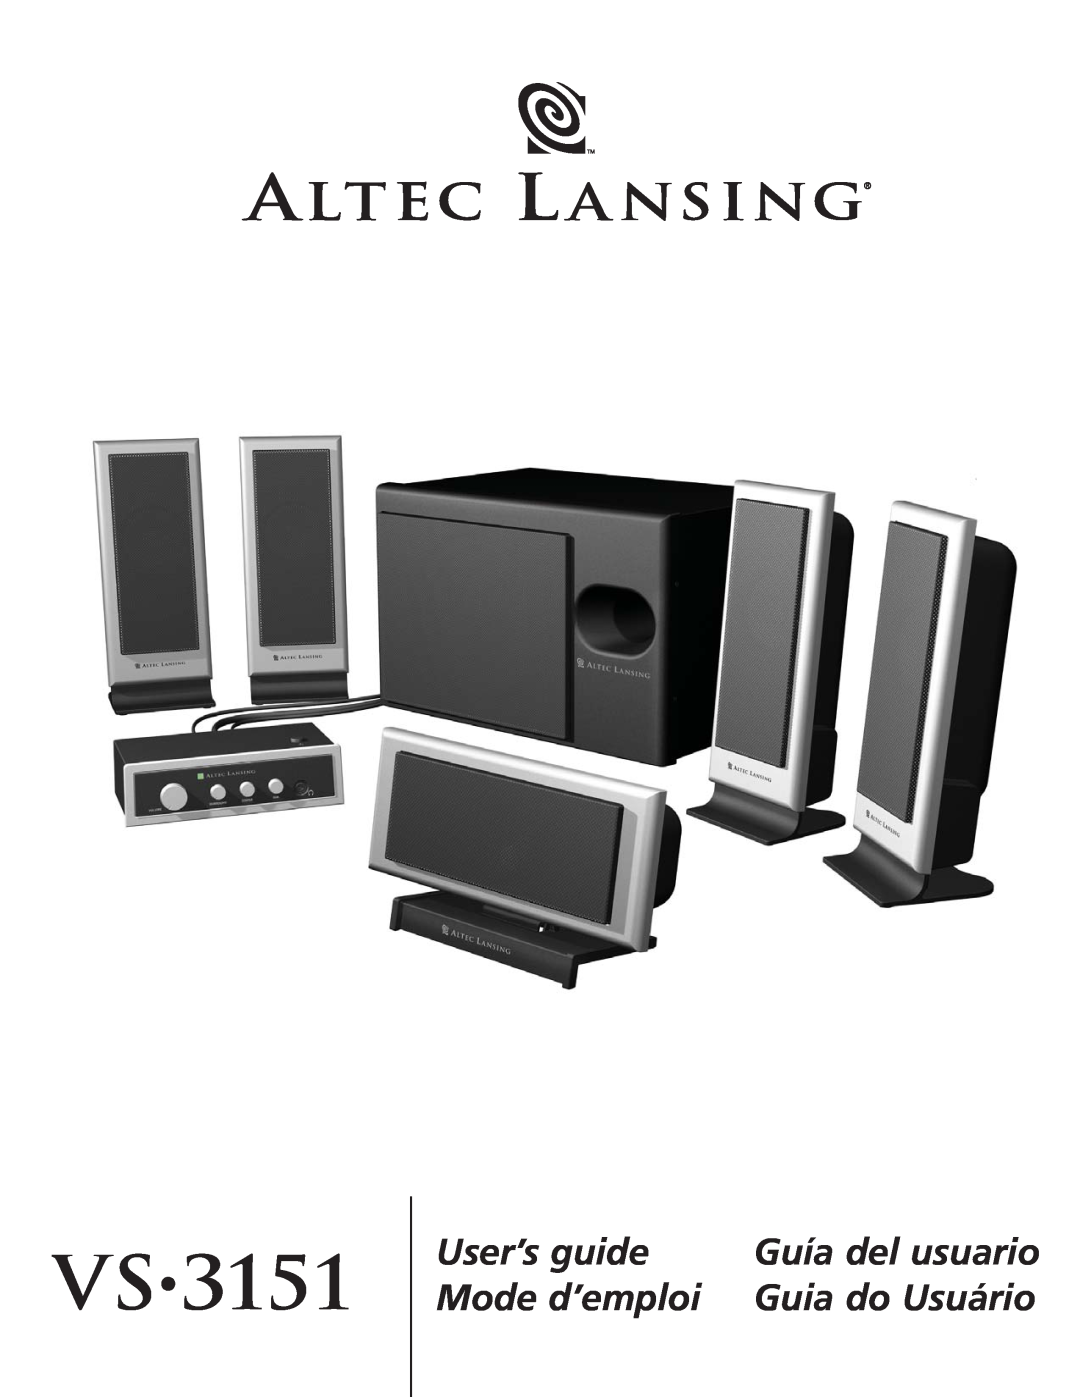 Altec Lansing 3151 manual Vs, User’s guide, Mode d’emploi, Guía del usuario, Guia do Usuário 